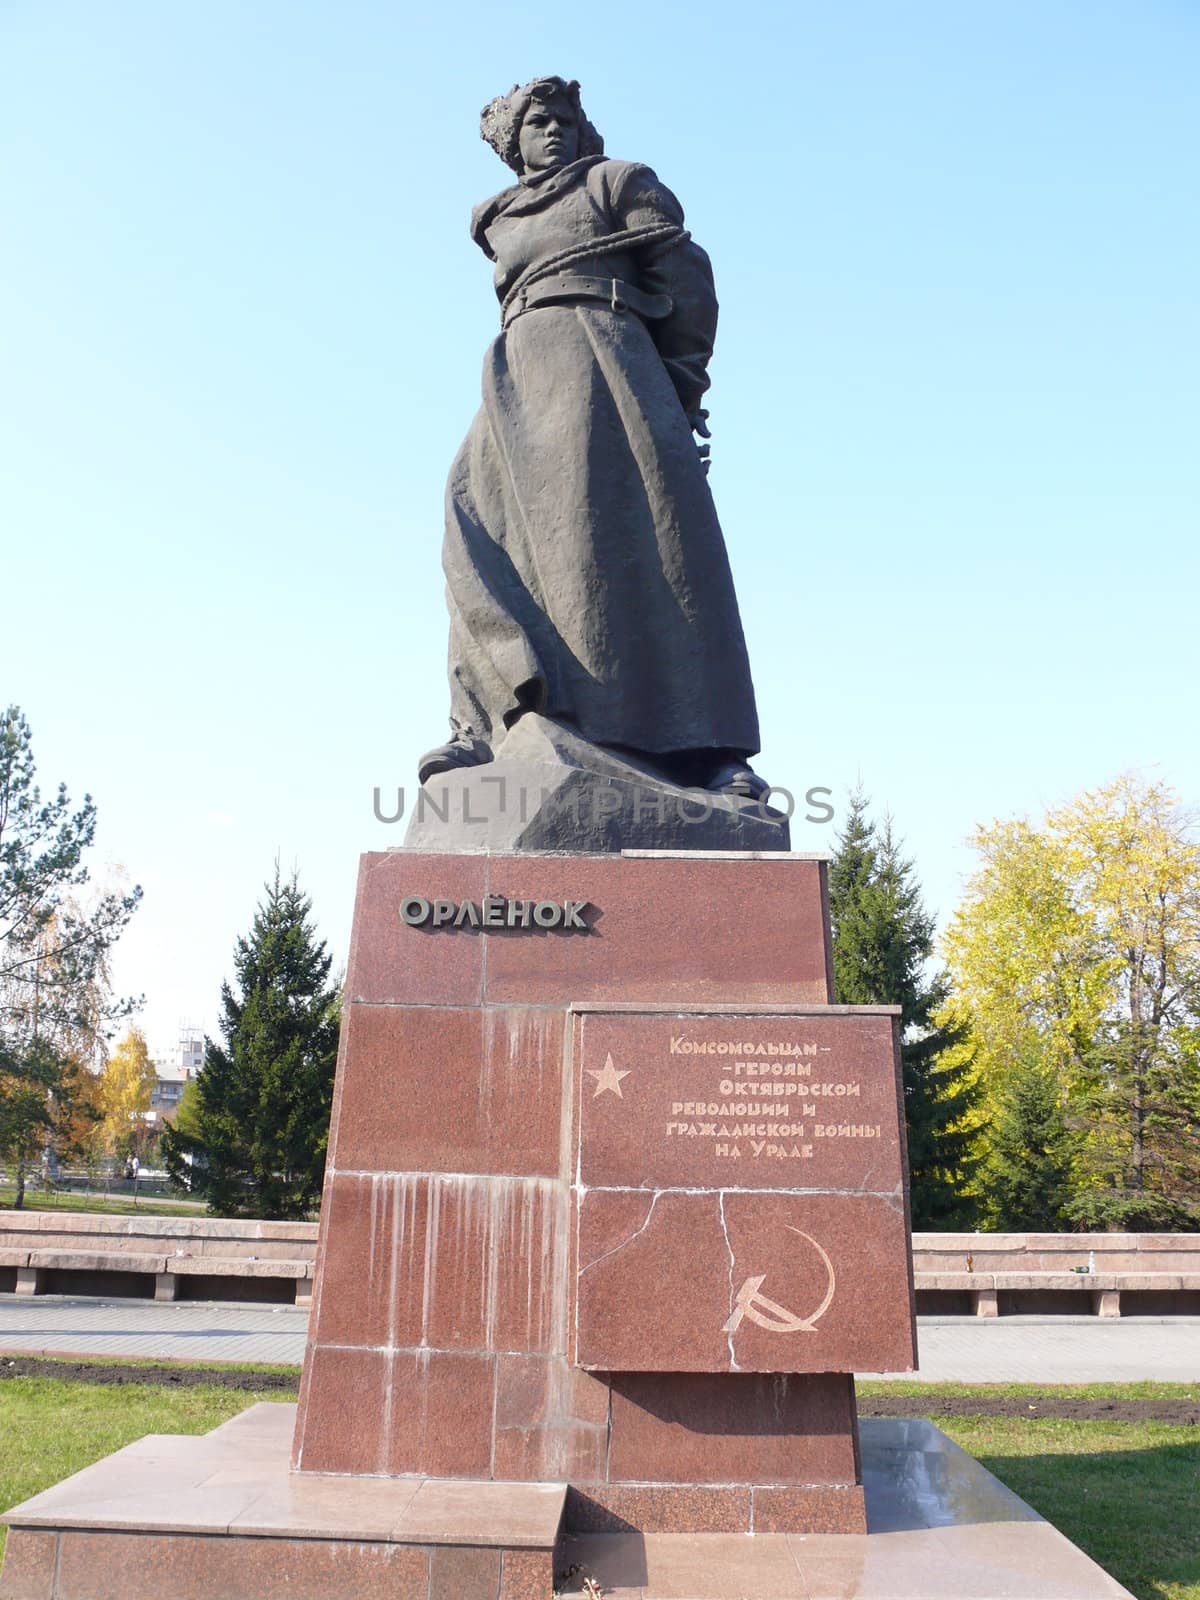 Monument Orlenok in Aloe pole - Chelyabinsk by Stoyanov